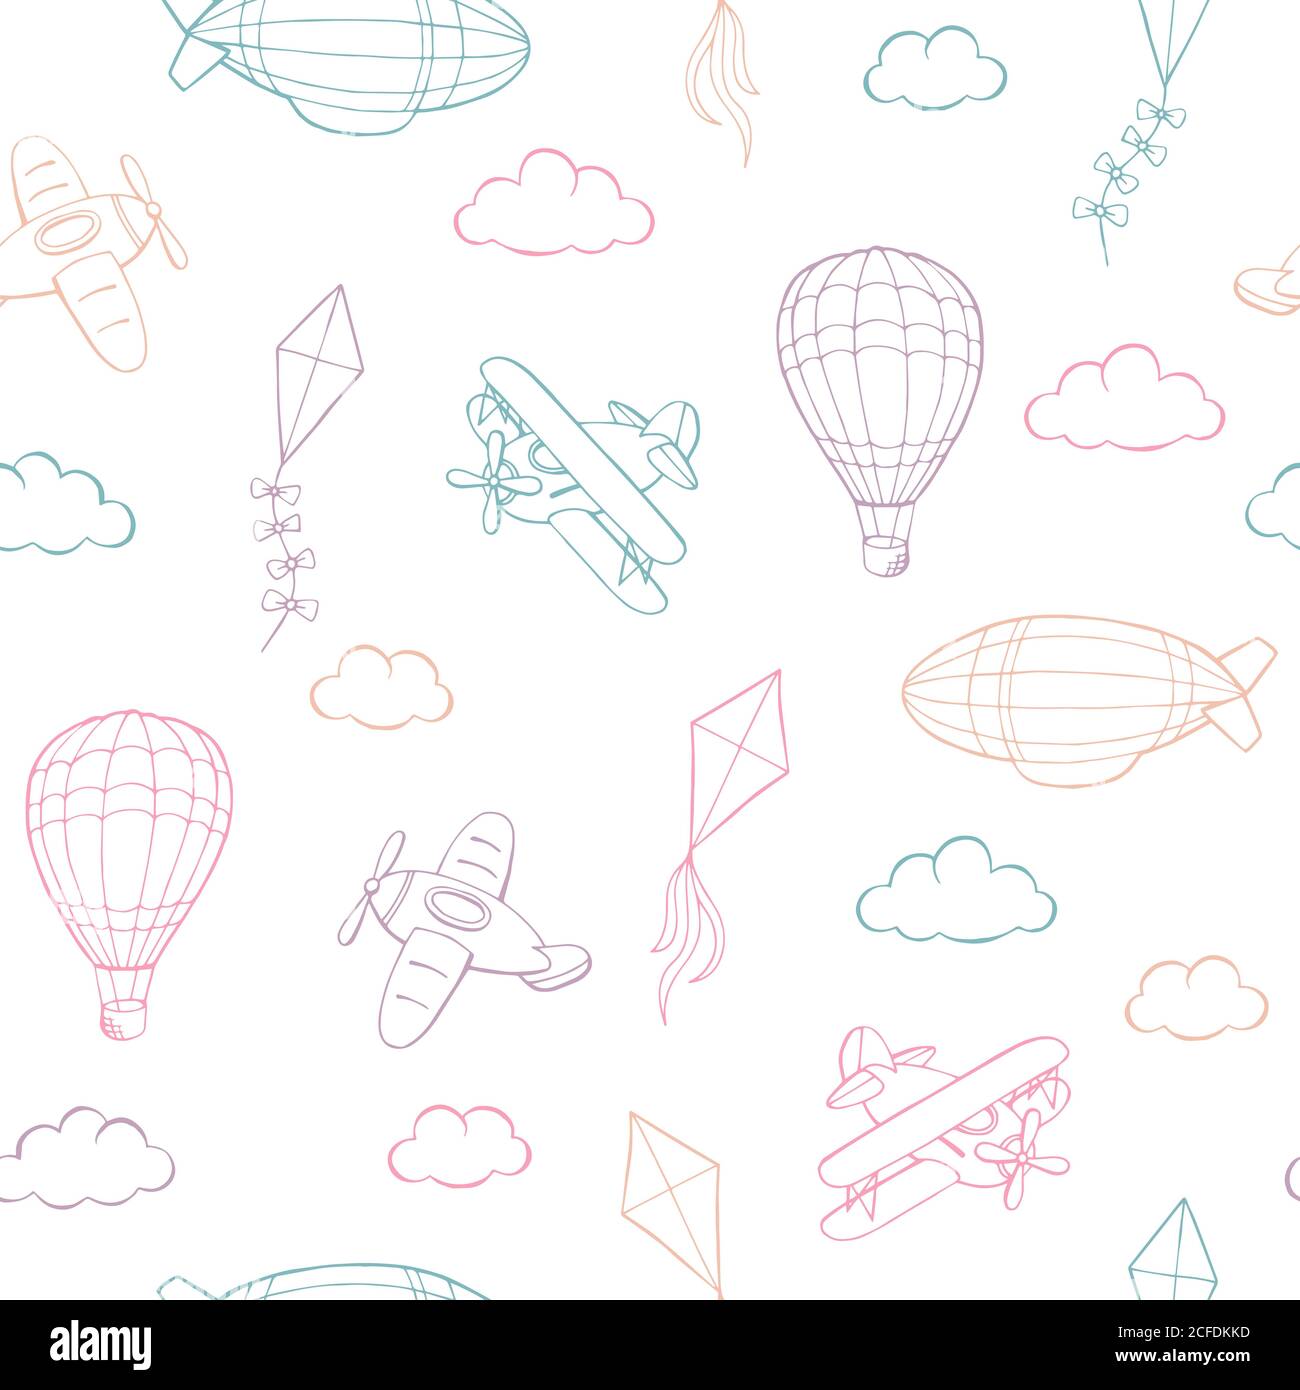 Fliegende Flugzeug Ballon Drachen Wolke Grafik Farbe Skizze nahtlose Muster Illustrationsvektor Stock Vektor